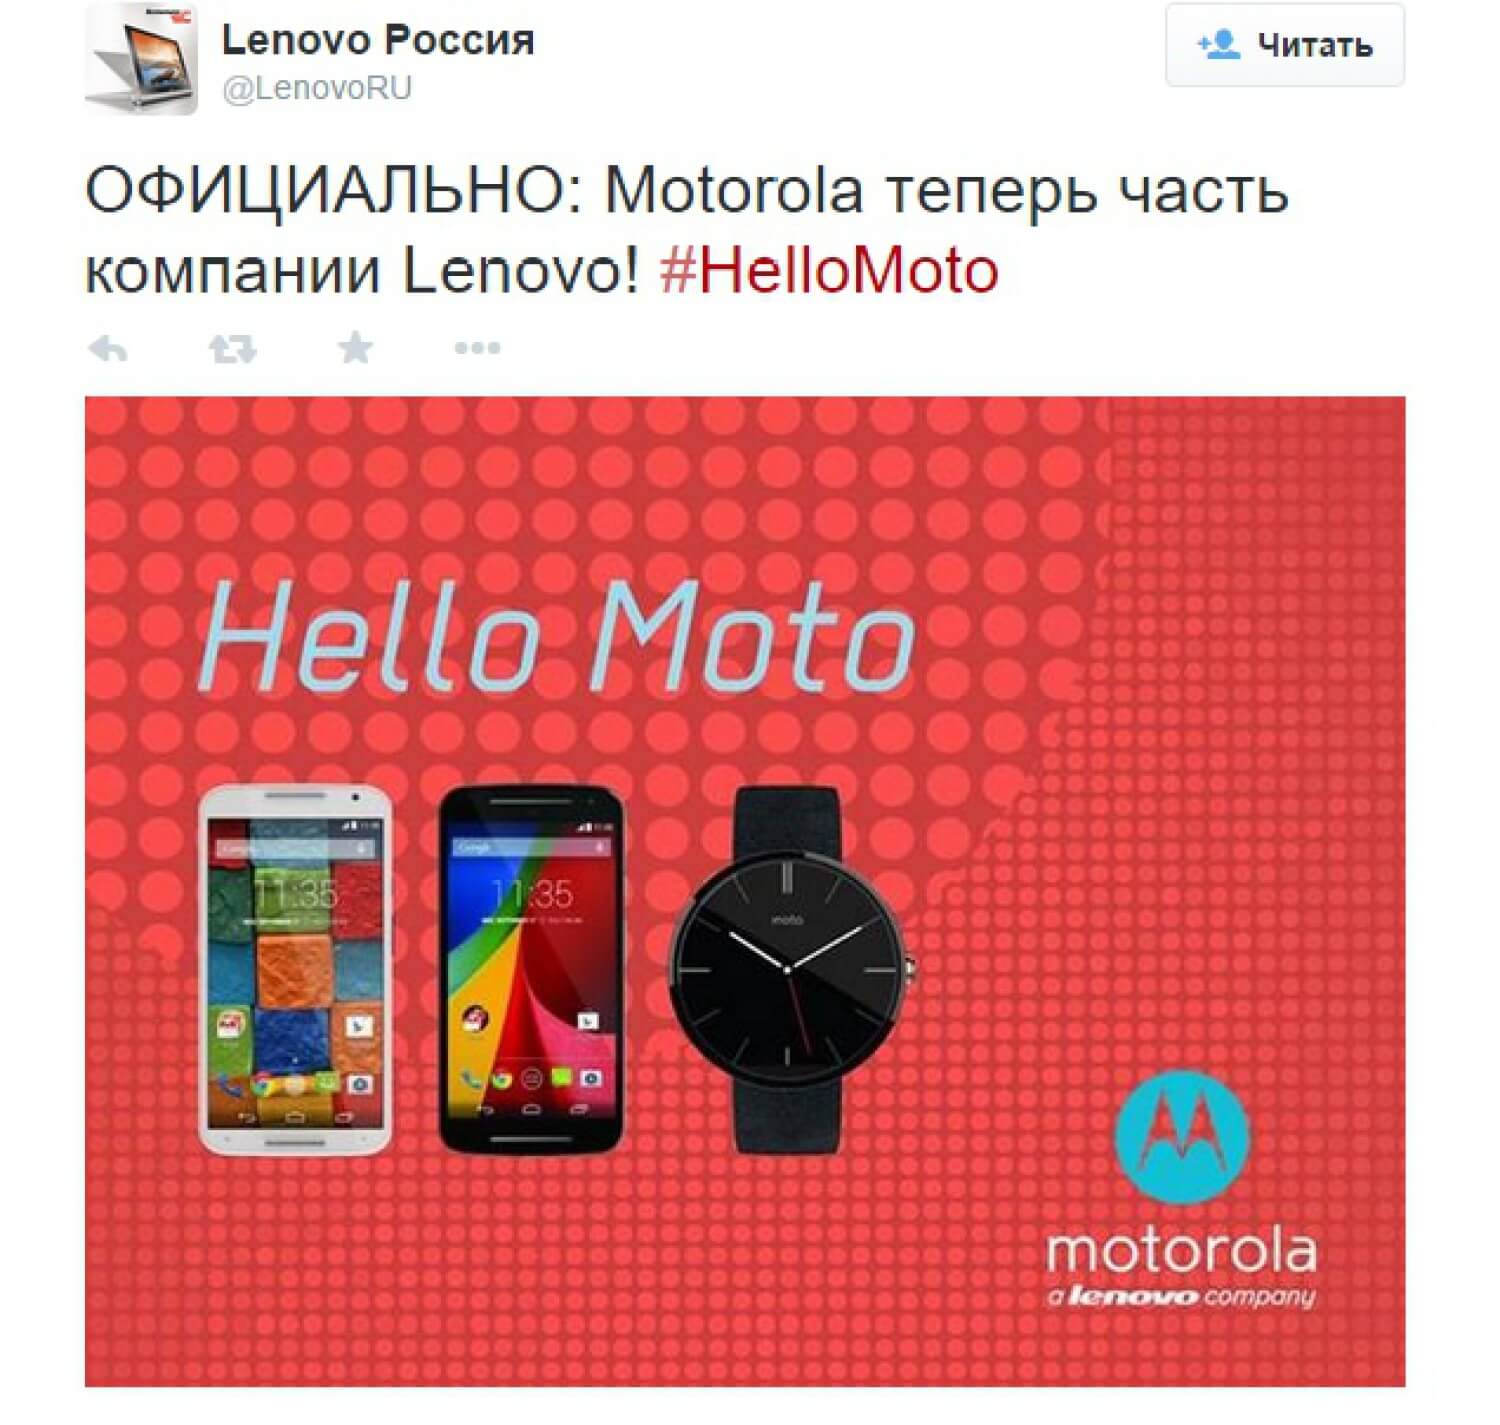 Lenovo and Motorola